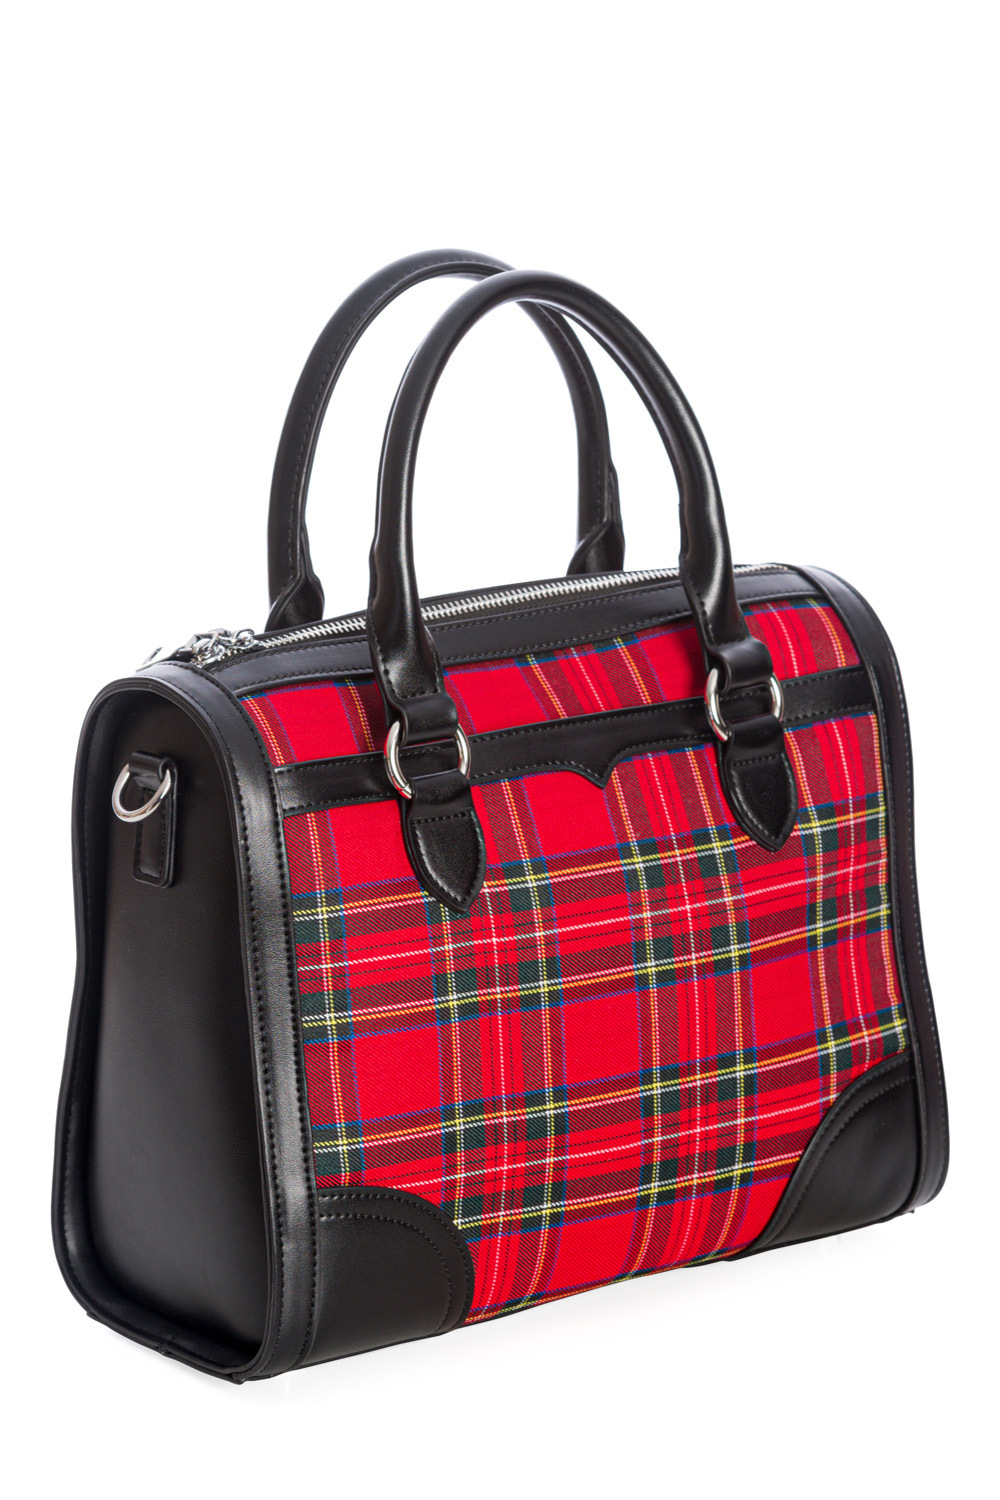 Banned Retro Uptown Girl Red Tartan Handbag